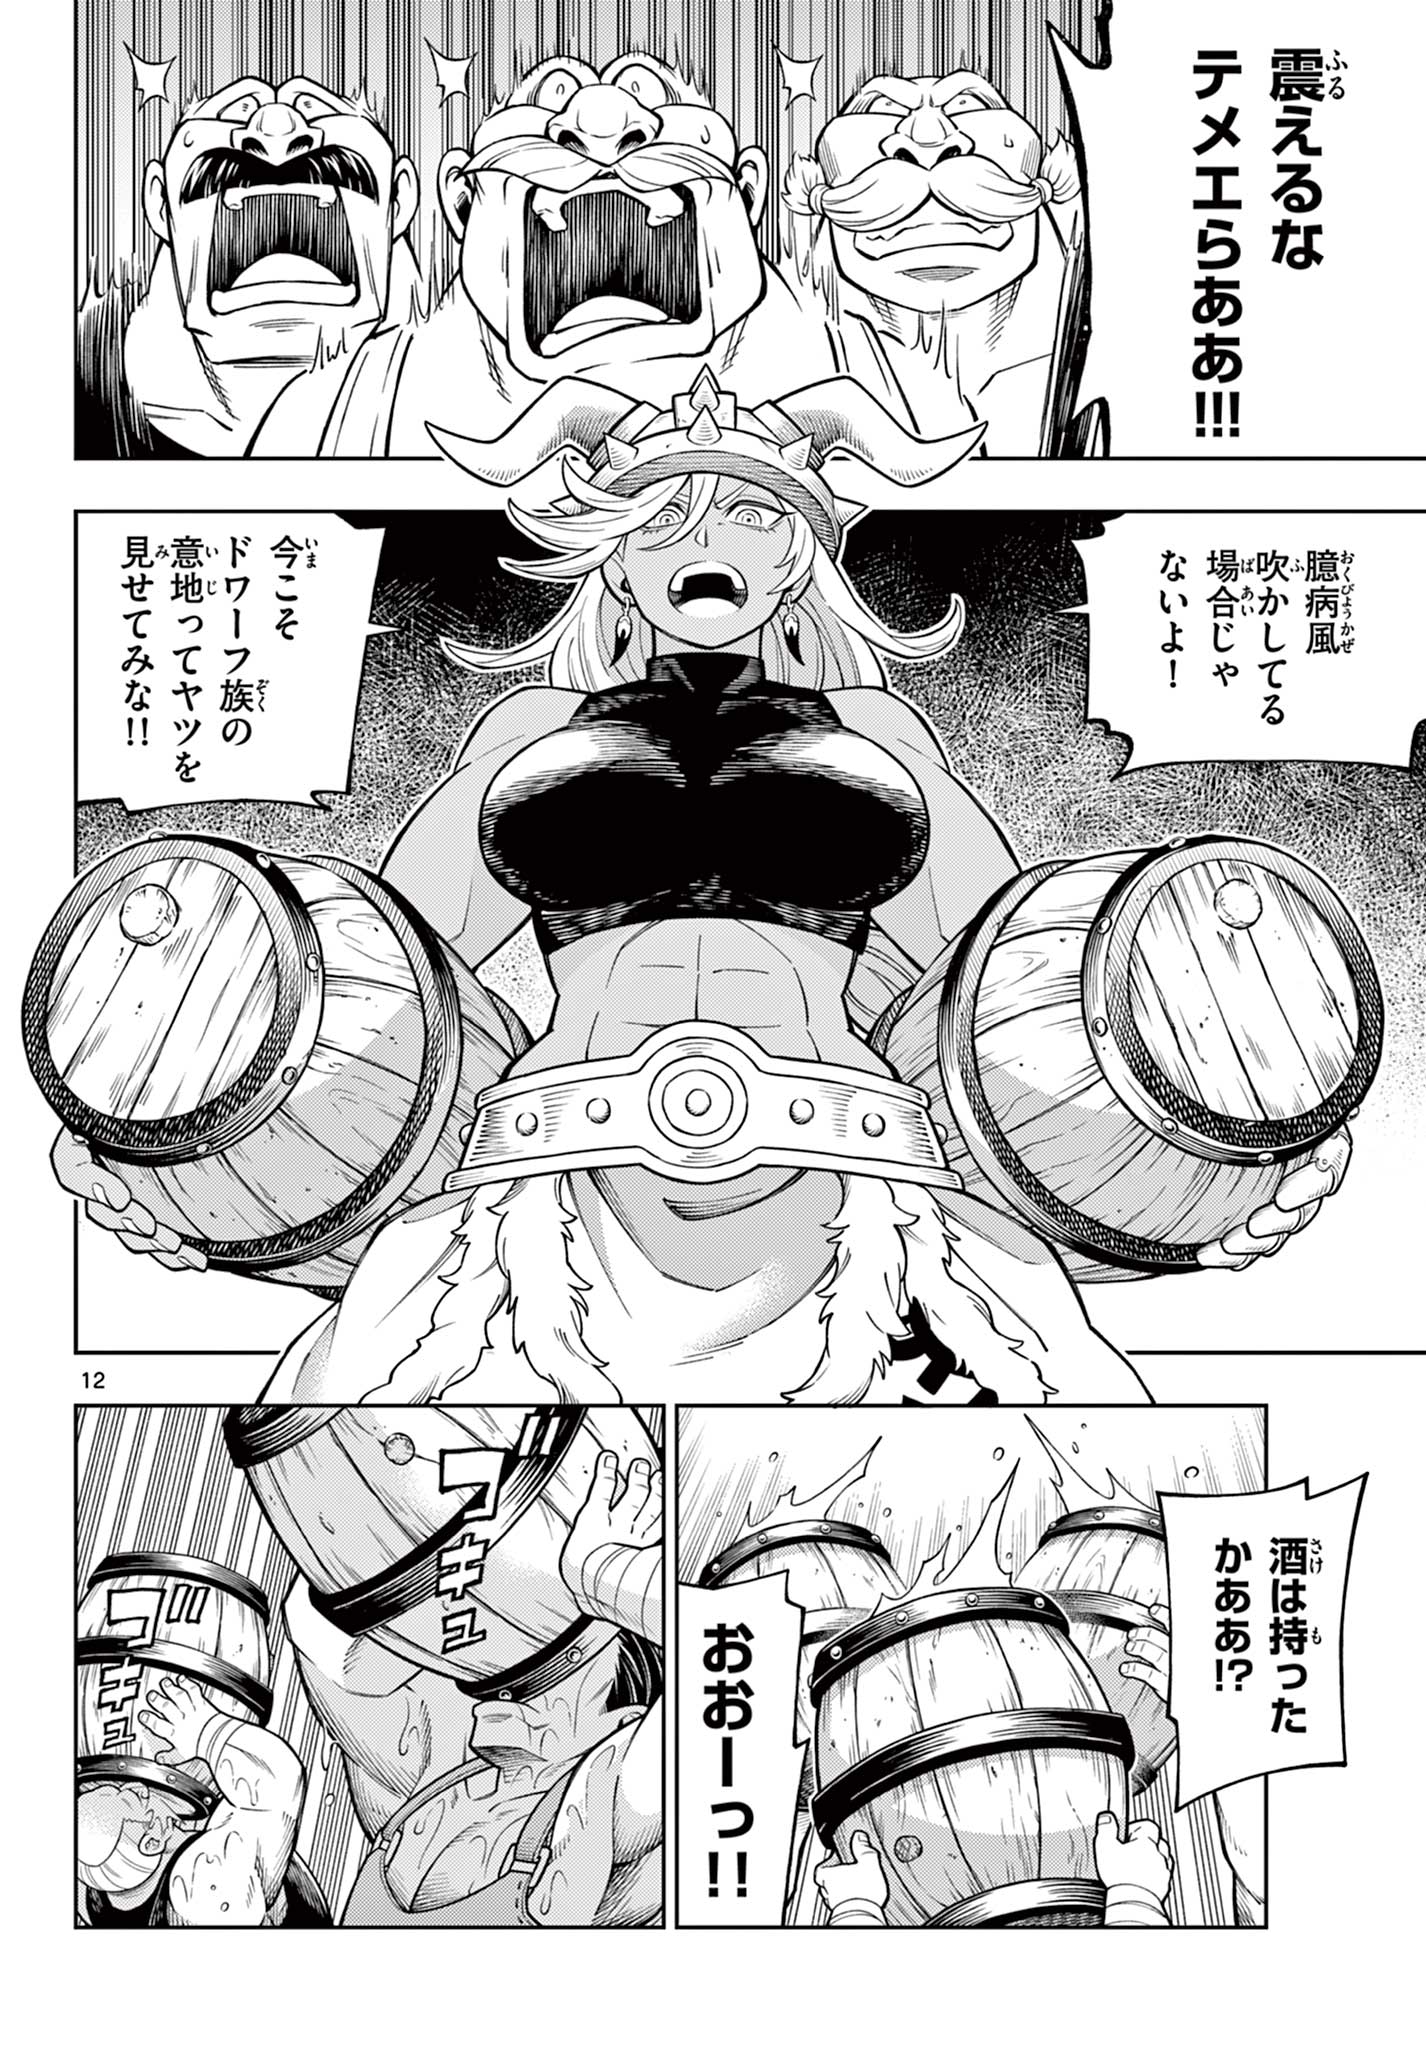 Soara to Mamono no ie - Chapter 28 - Page 12